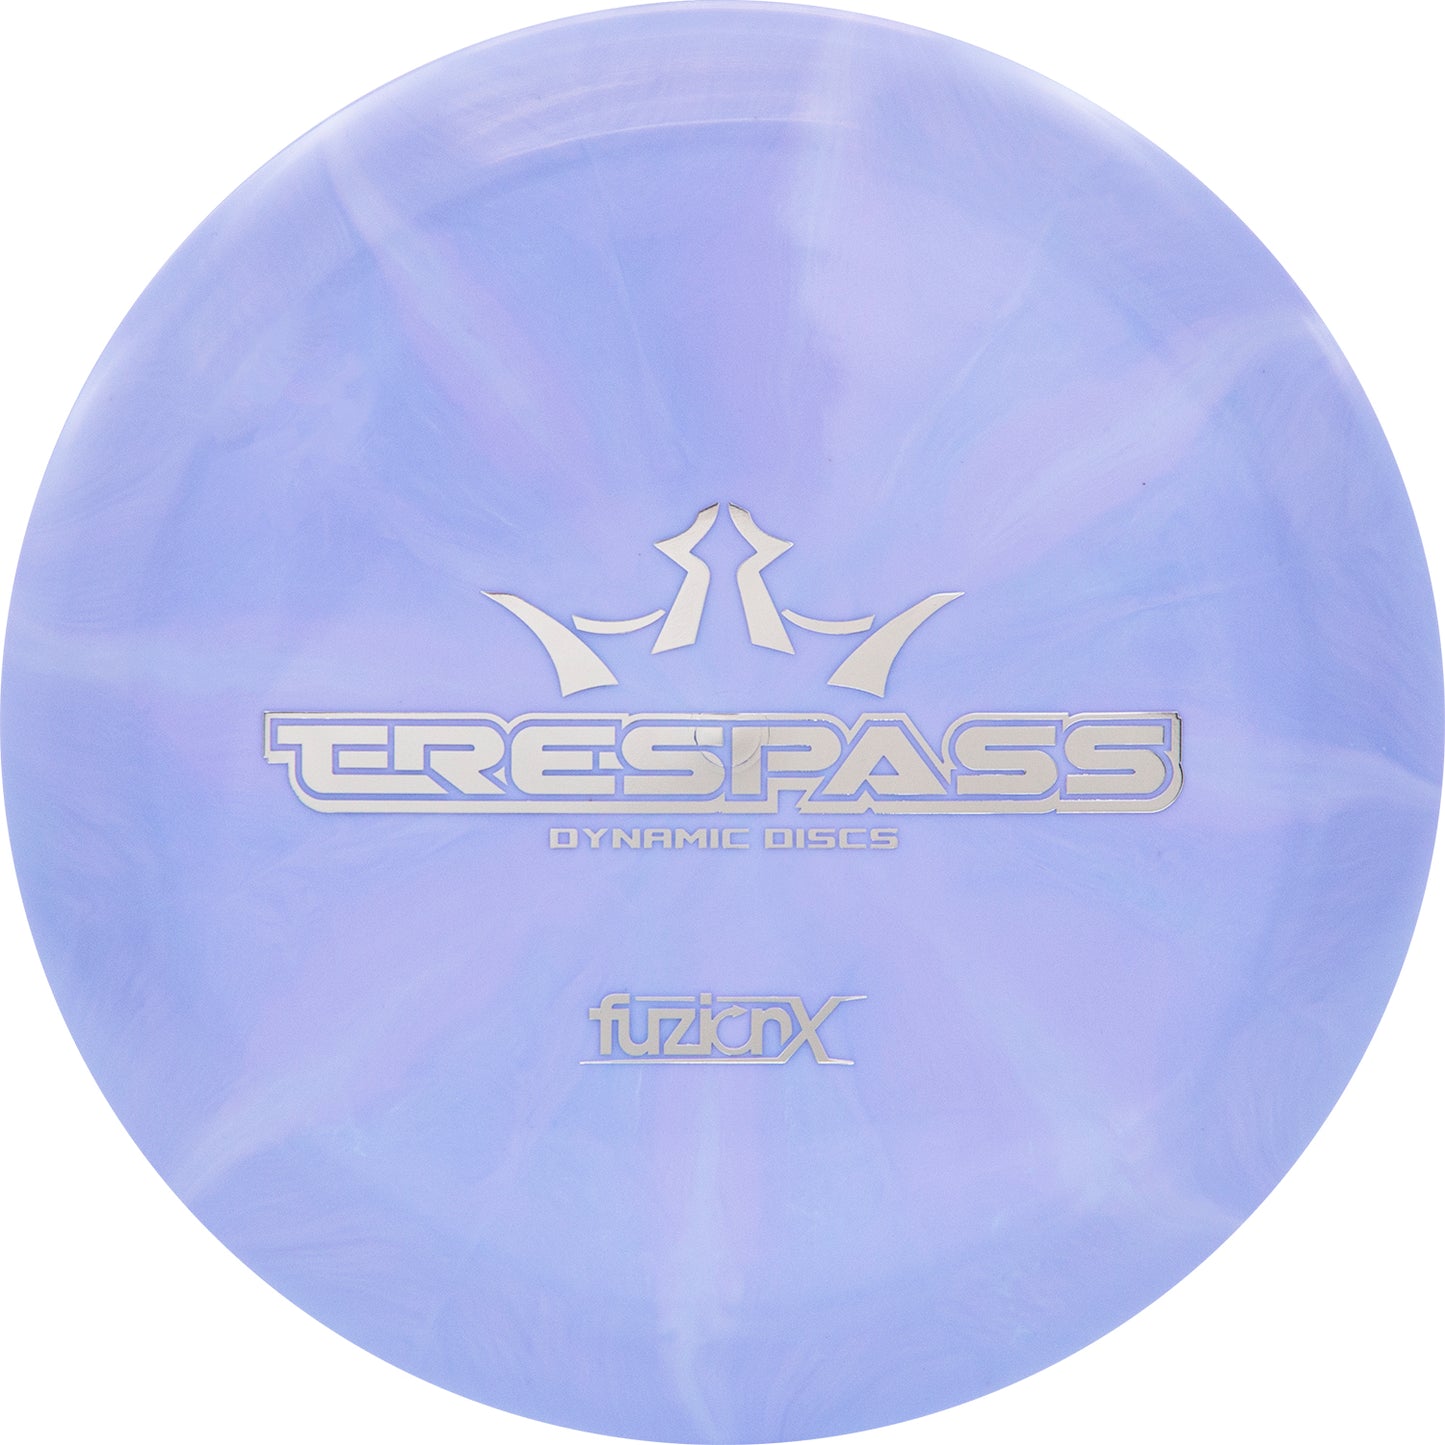 Dynamic Discs Fuzion-X Burst Trespass